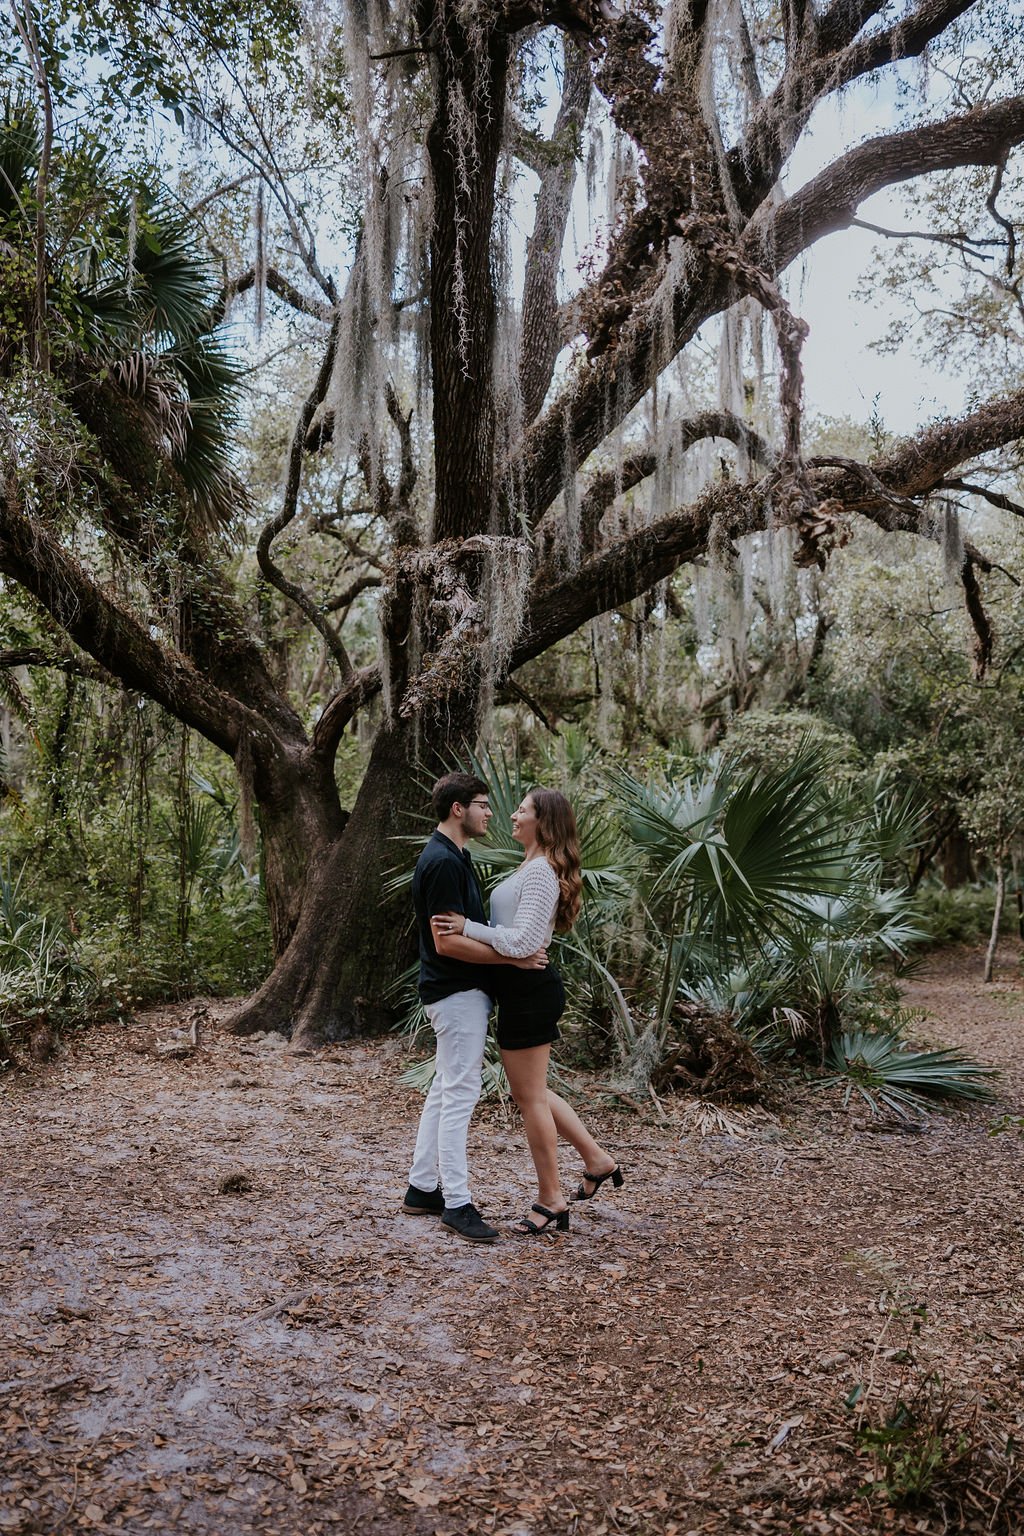 Destination wedding photographer captures couple embracing one another